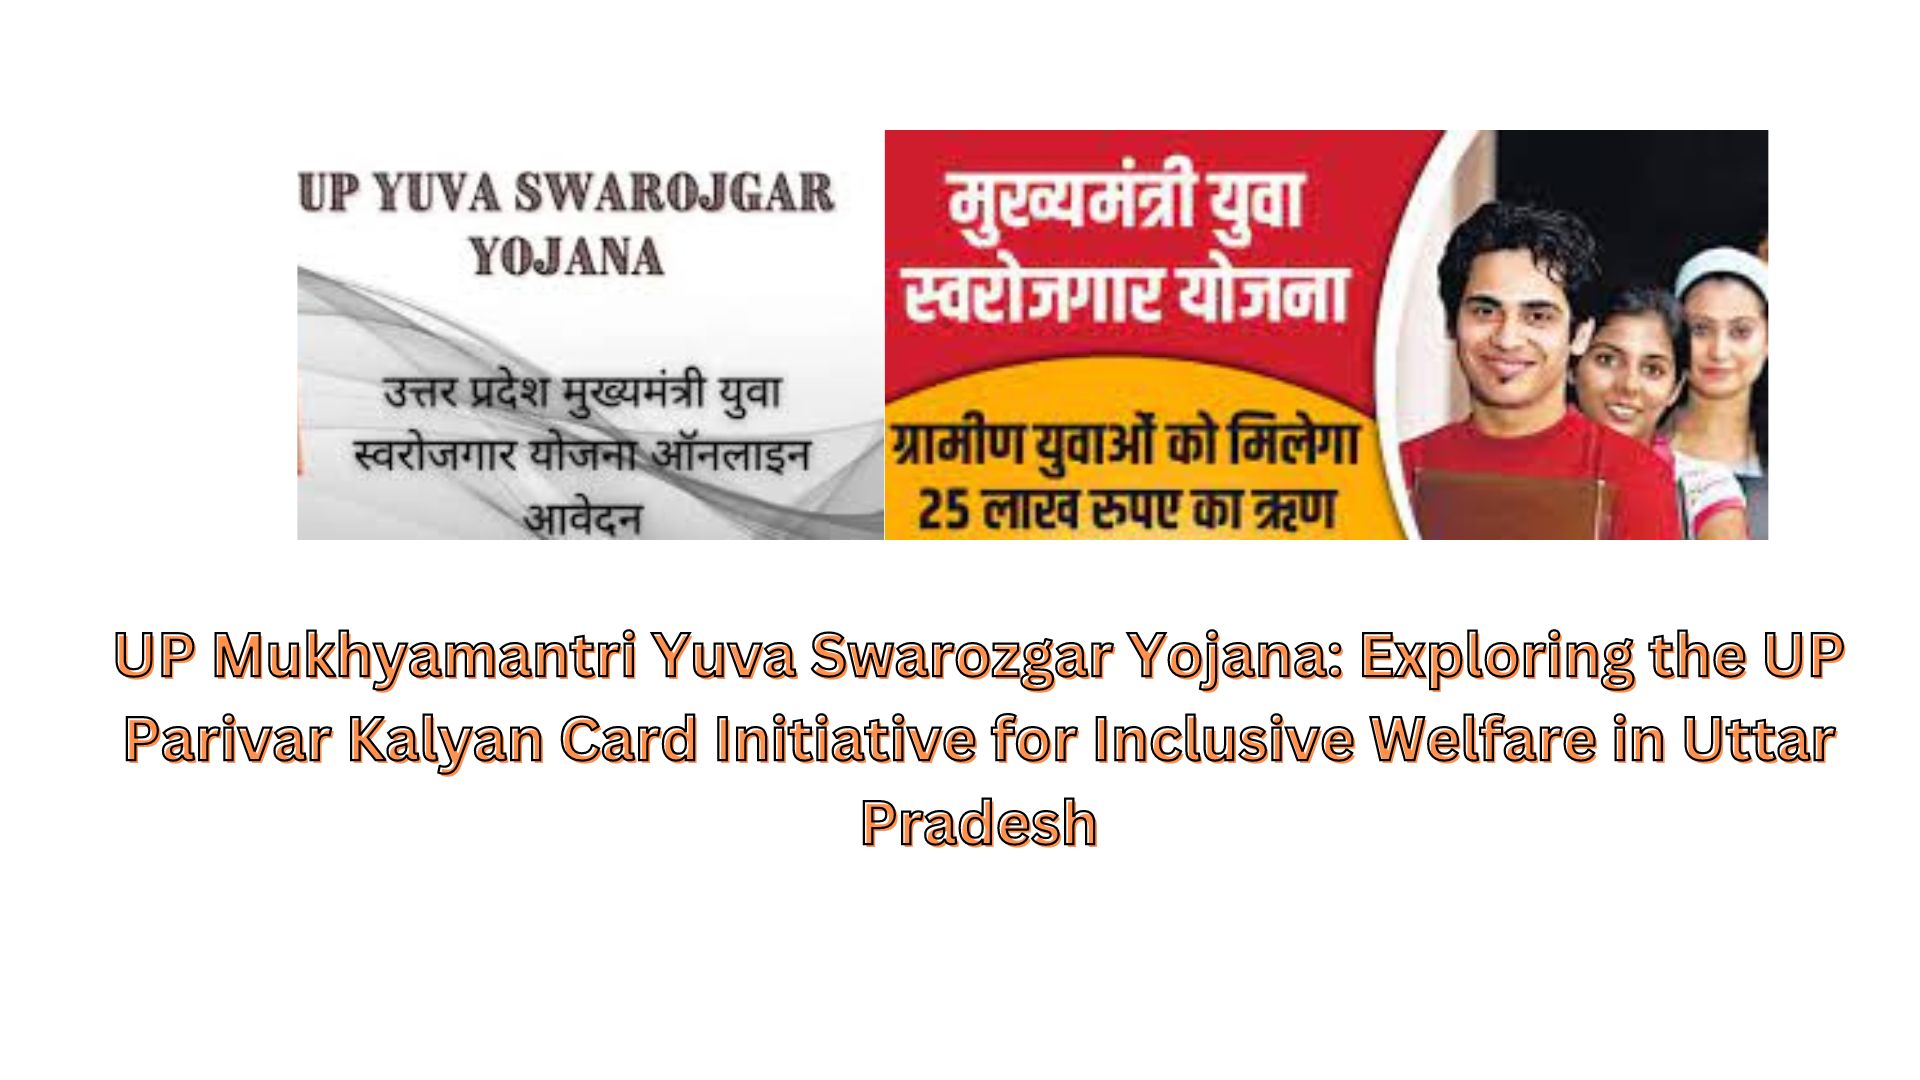 UP Mukhyamantri Yuva Swarozgar Yojana: Exploring the UP Parivar Kalyan Card Initiative for Inclusive Welfare in Uttar Pradesh